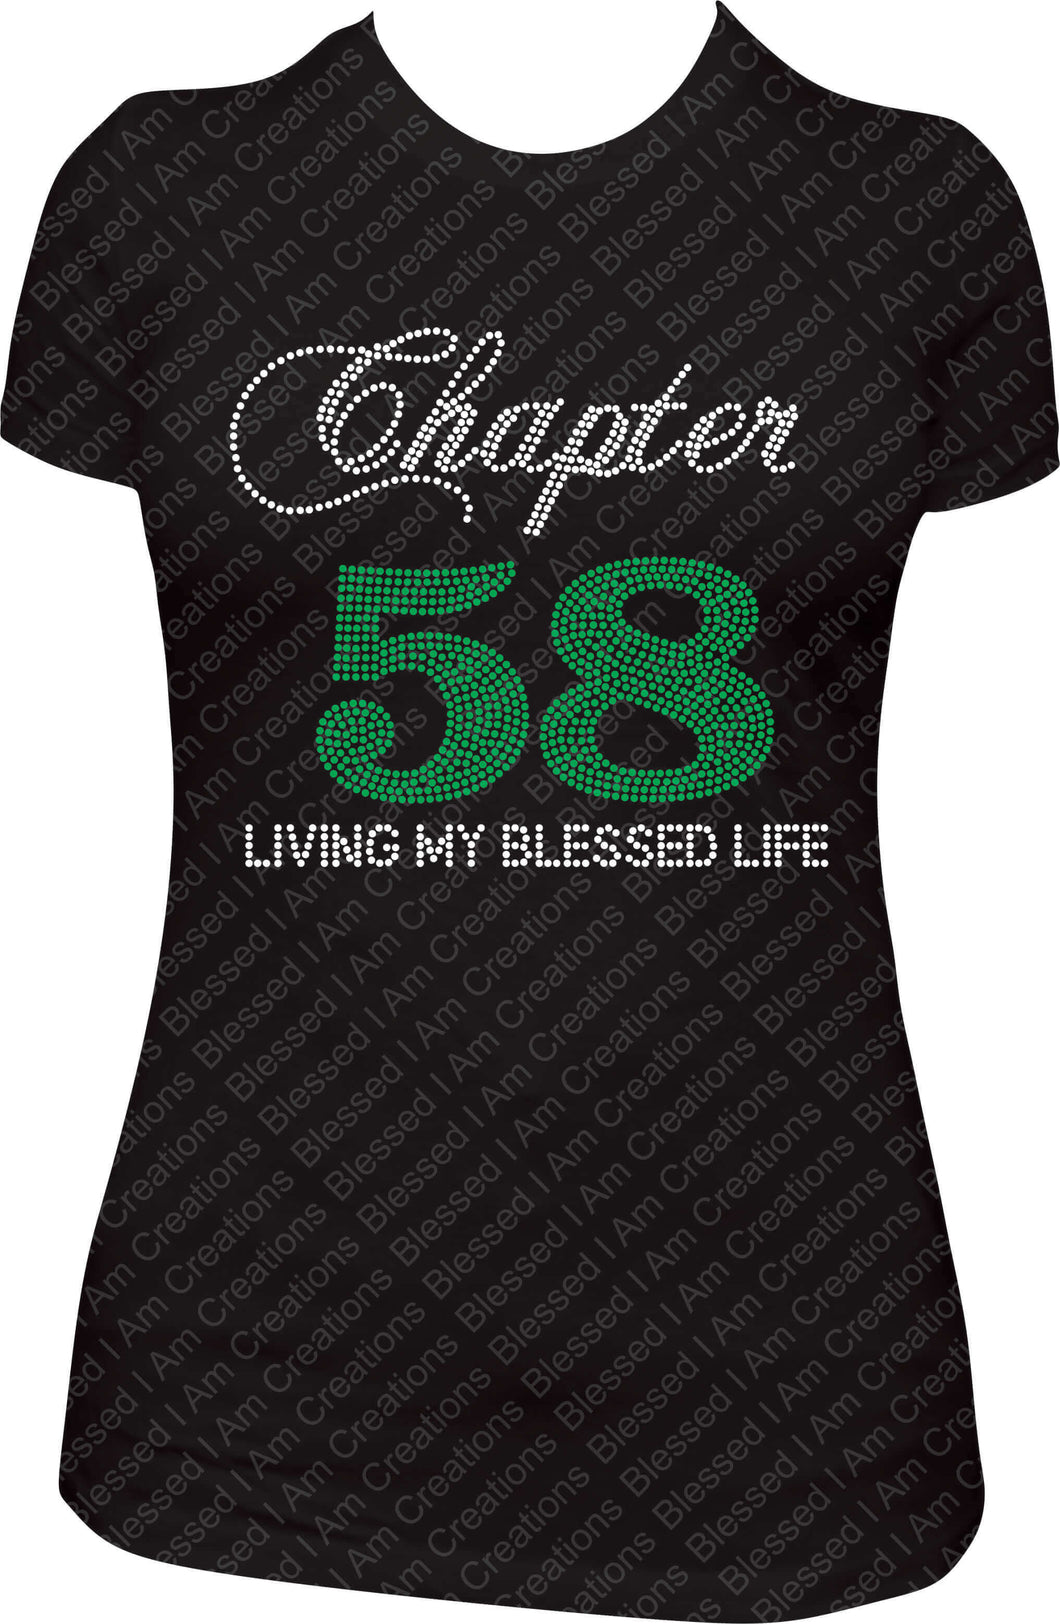 Chapter 58 Living My Blessed Life Rhinestone Birthday shirt